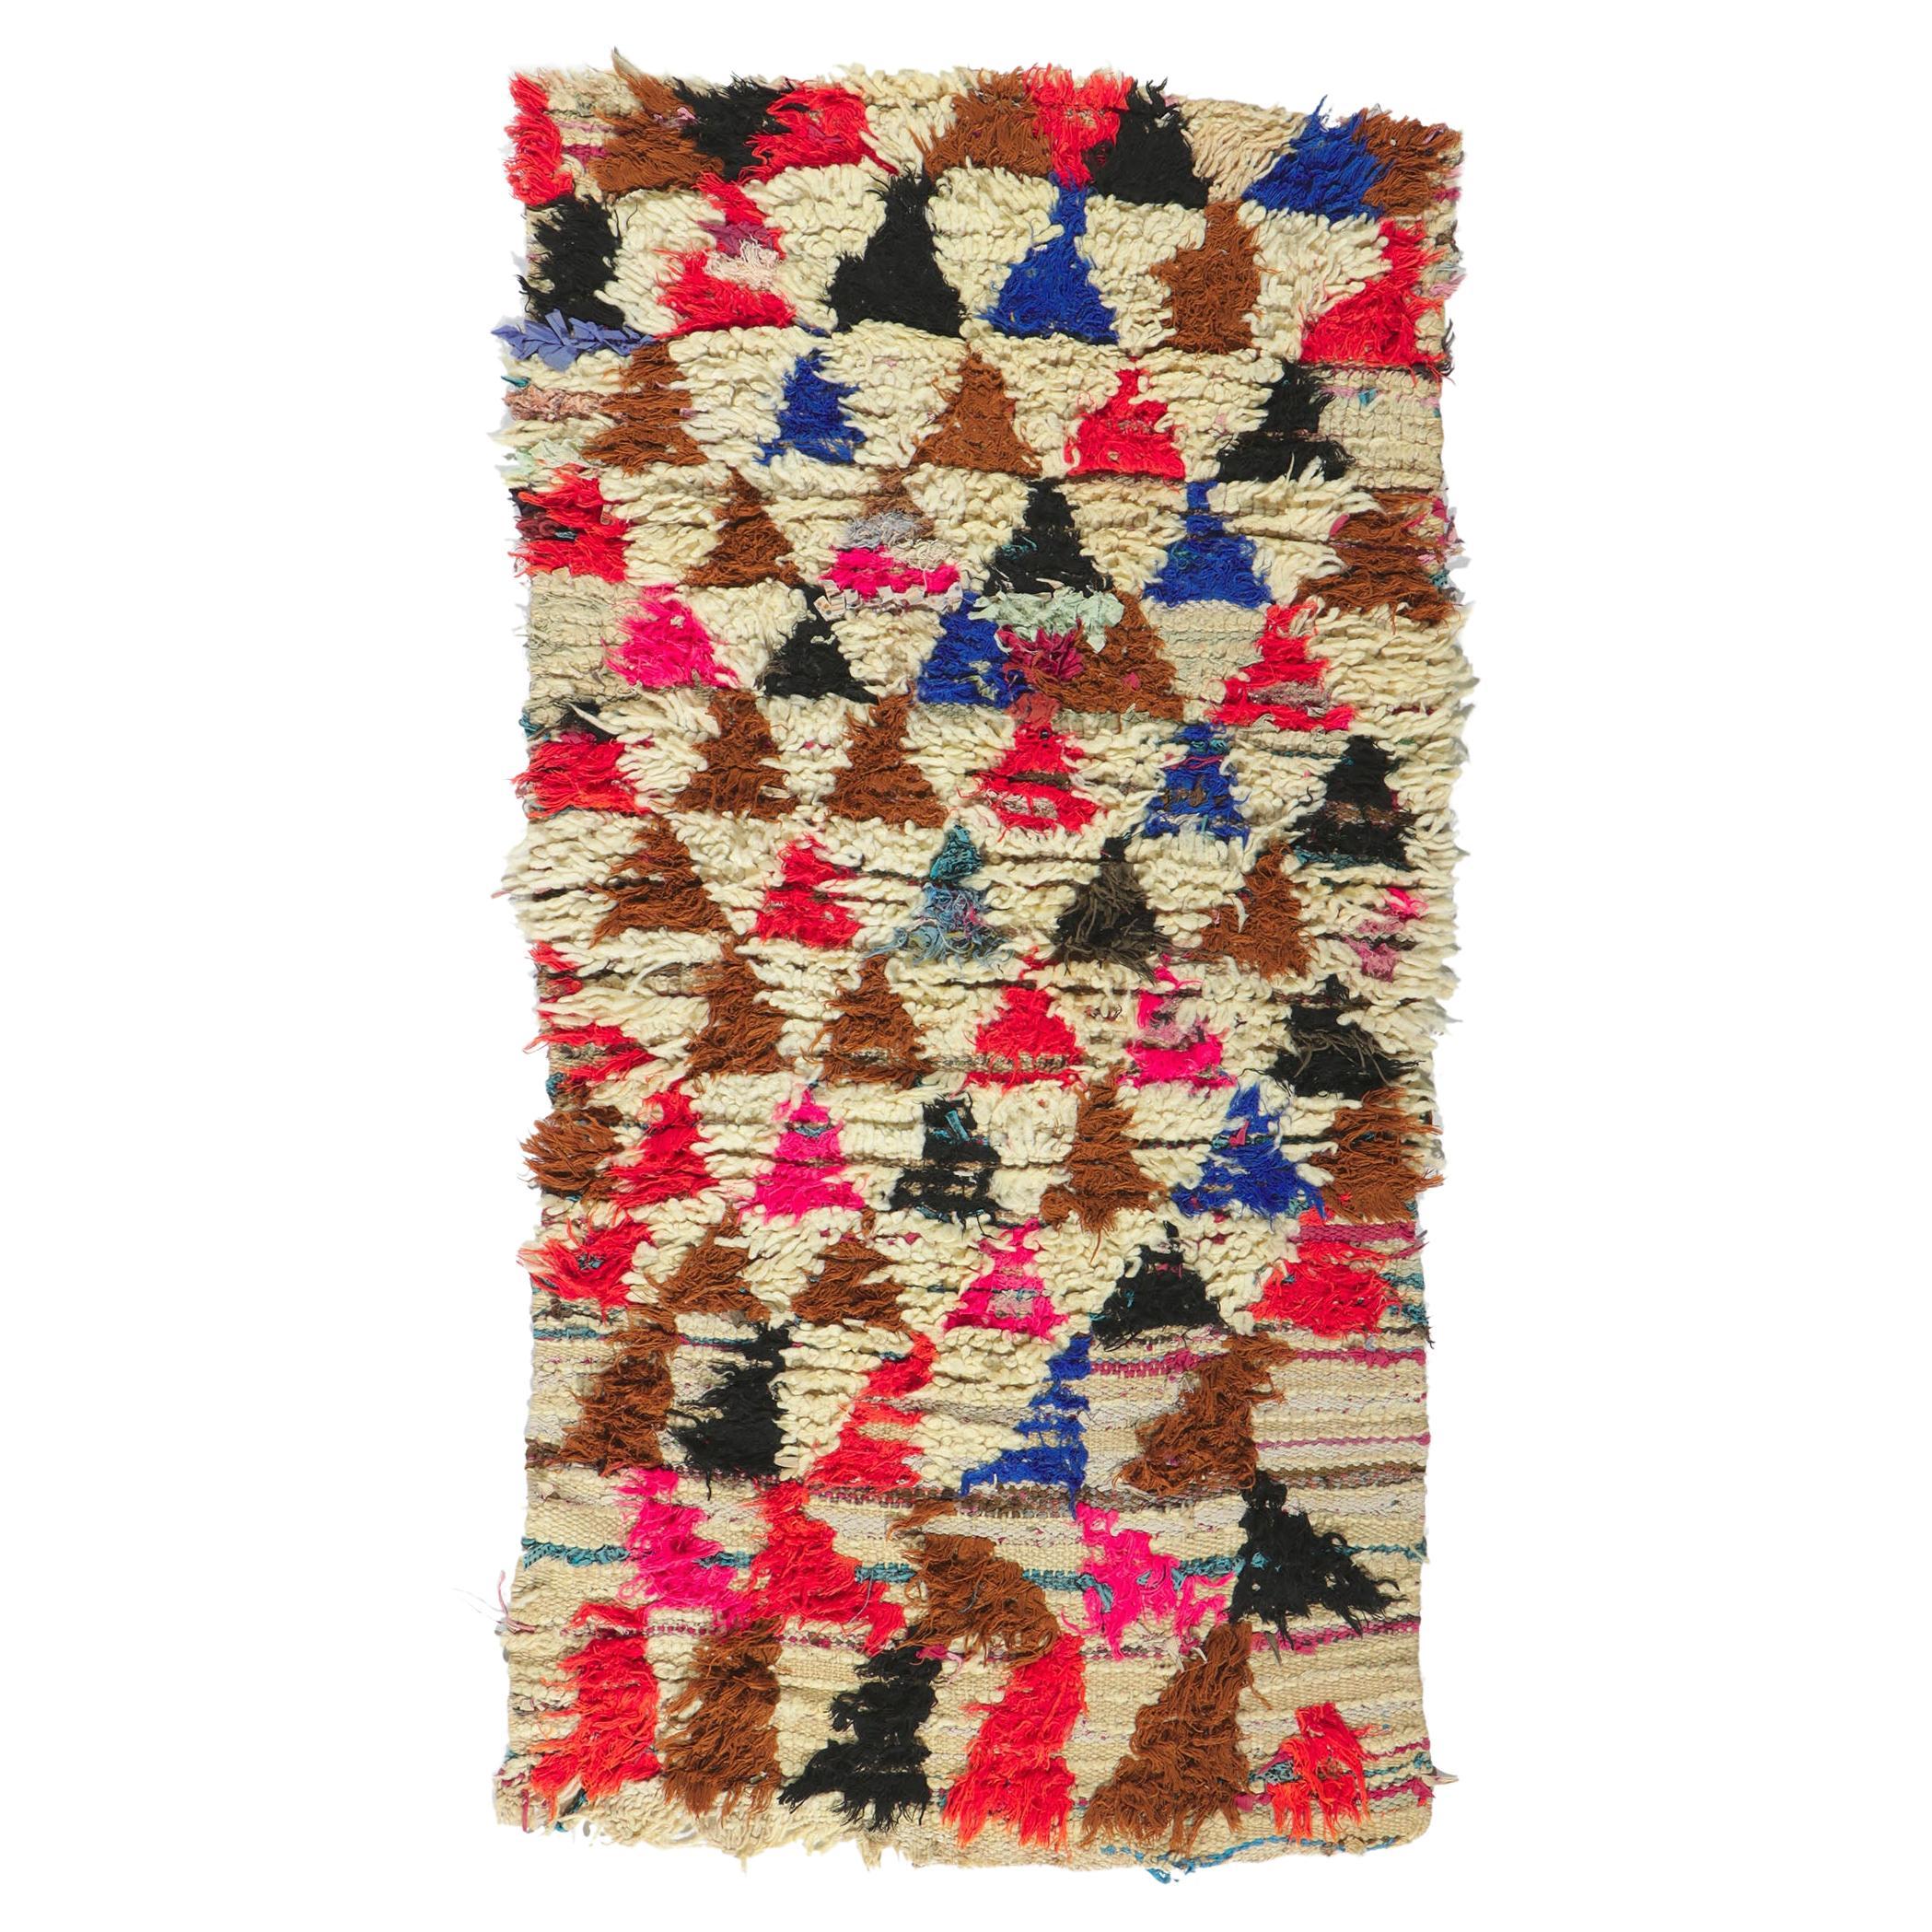 Vintage Boucherouite Moroccan Rag Rug, Cozy Boho Meets Rugged Beauty